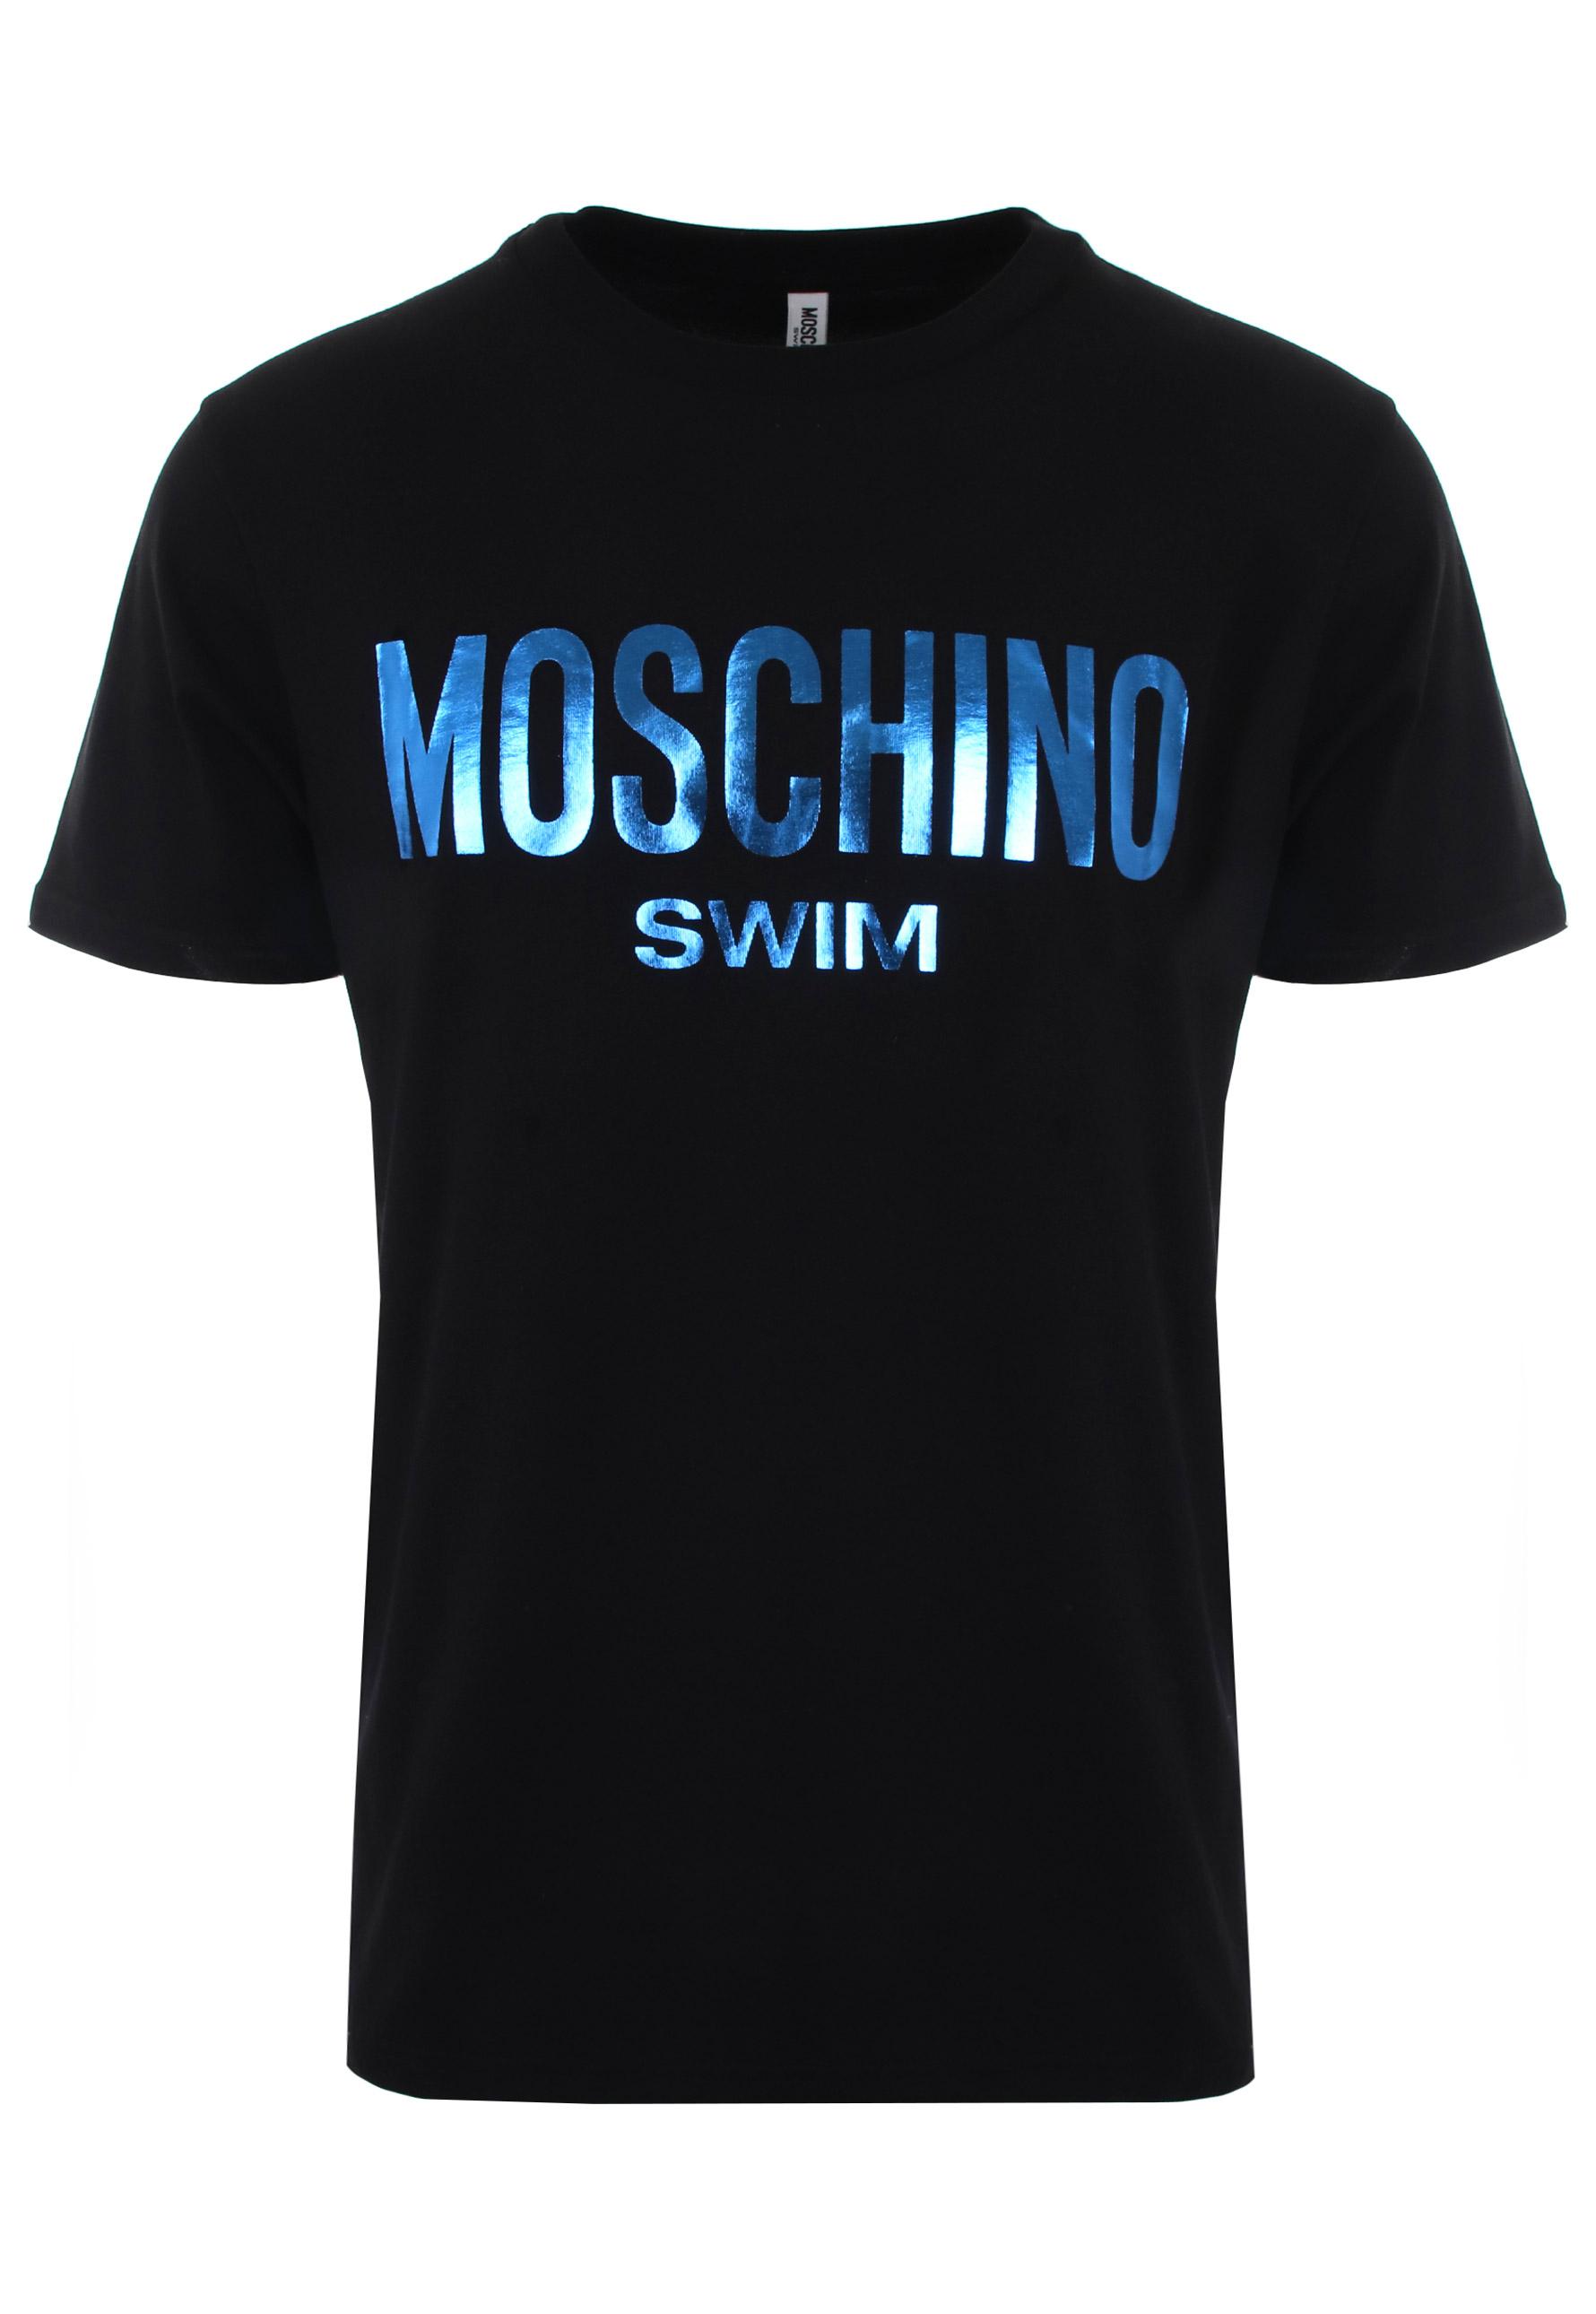 Moschino Cotton Metallic Swim Logo T-shirt Black/blue for Men - Lyst